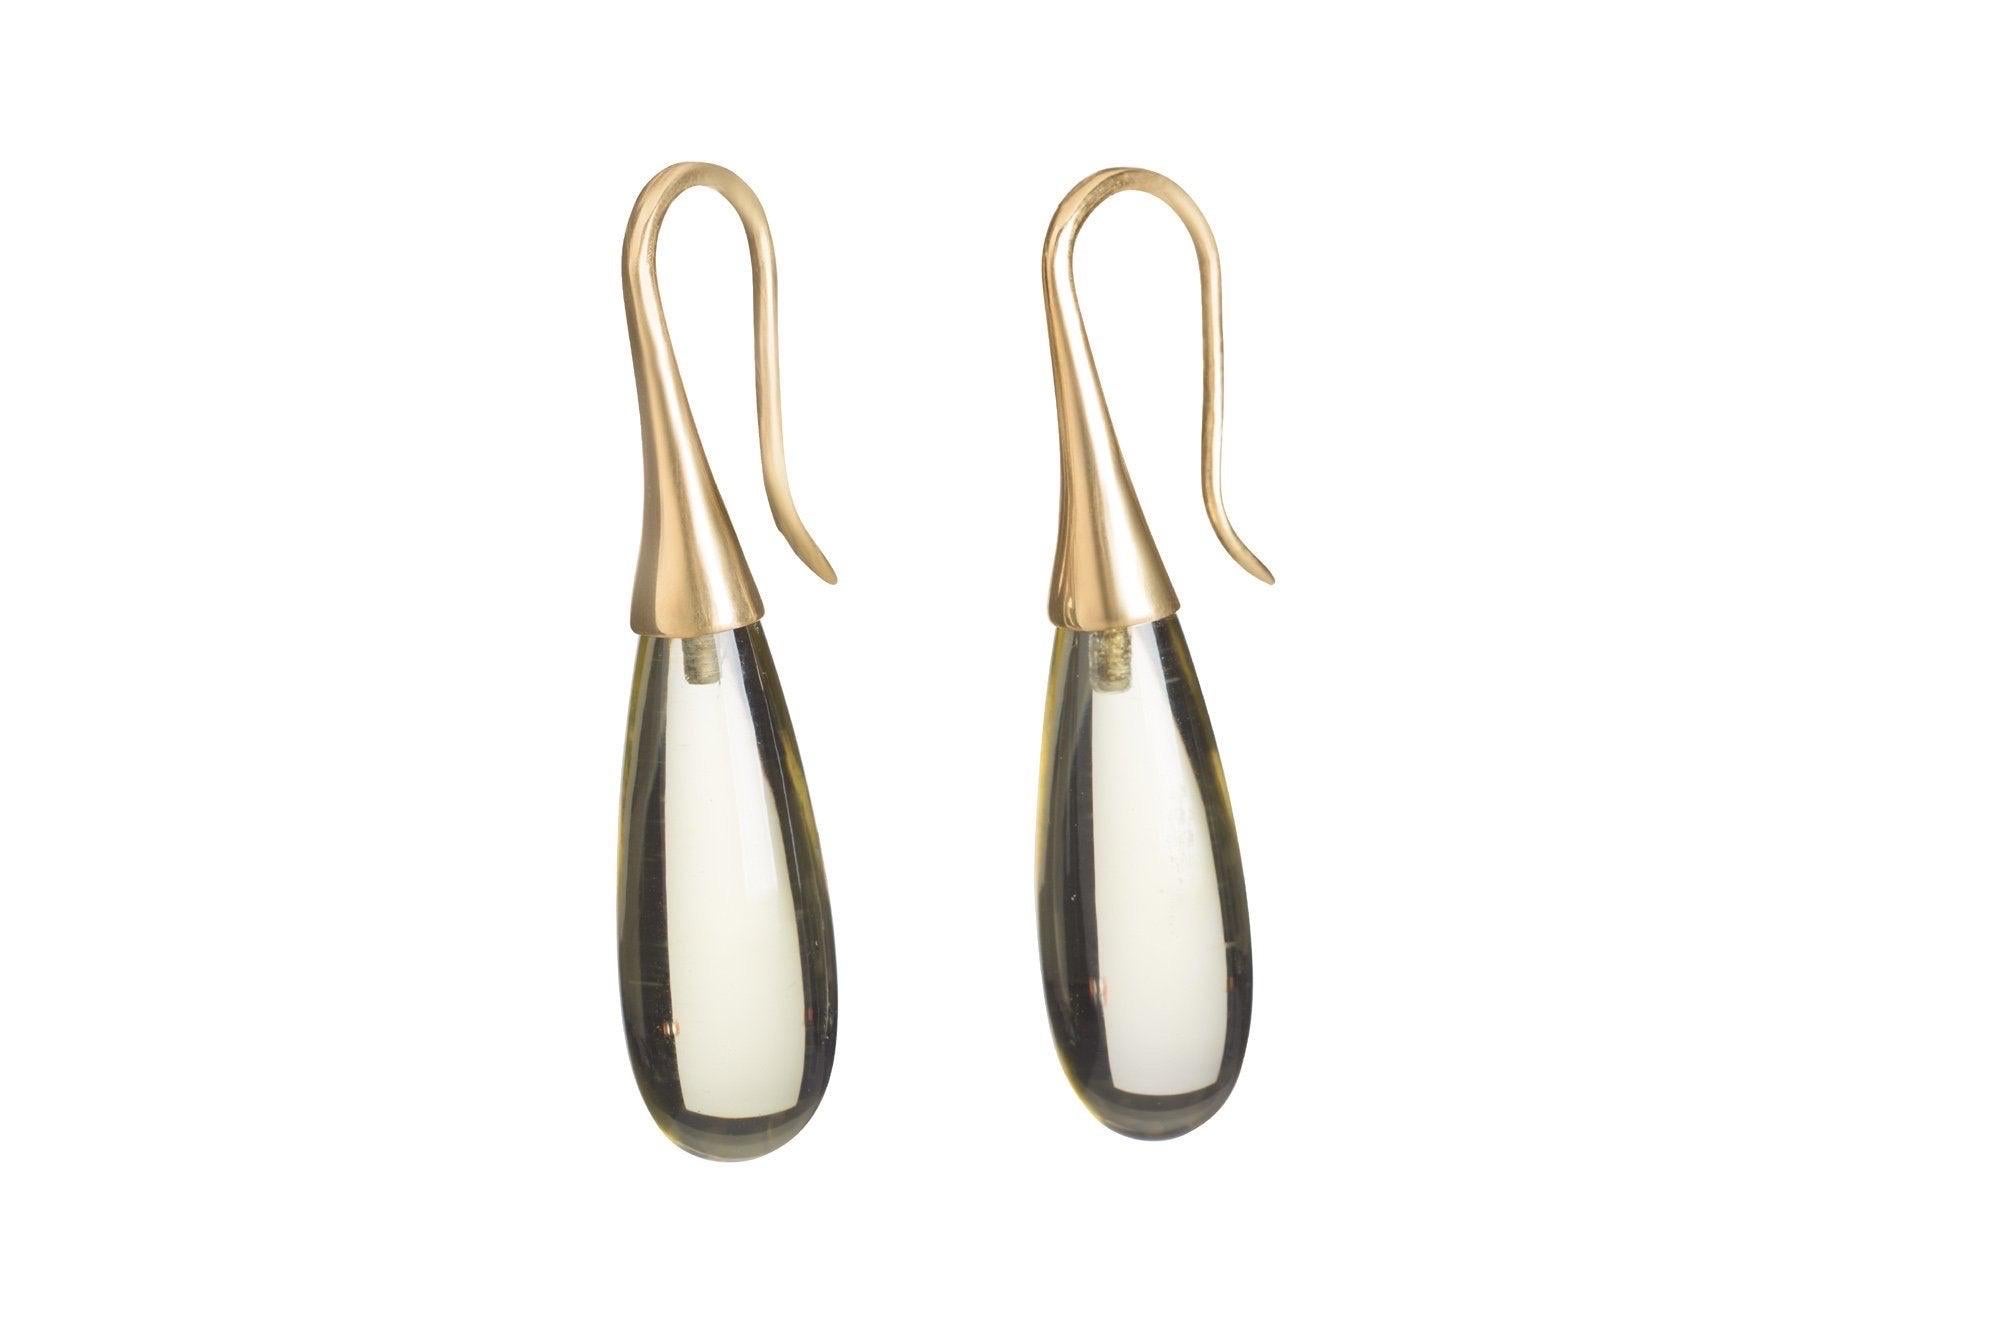 Oro Verdi quartz, elongated smooth long drops exude a quiet elegance capped with gabrielle's classic 18k cone cap earwire.